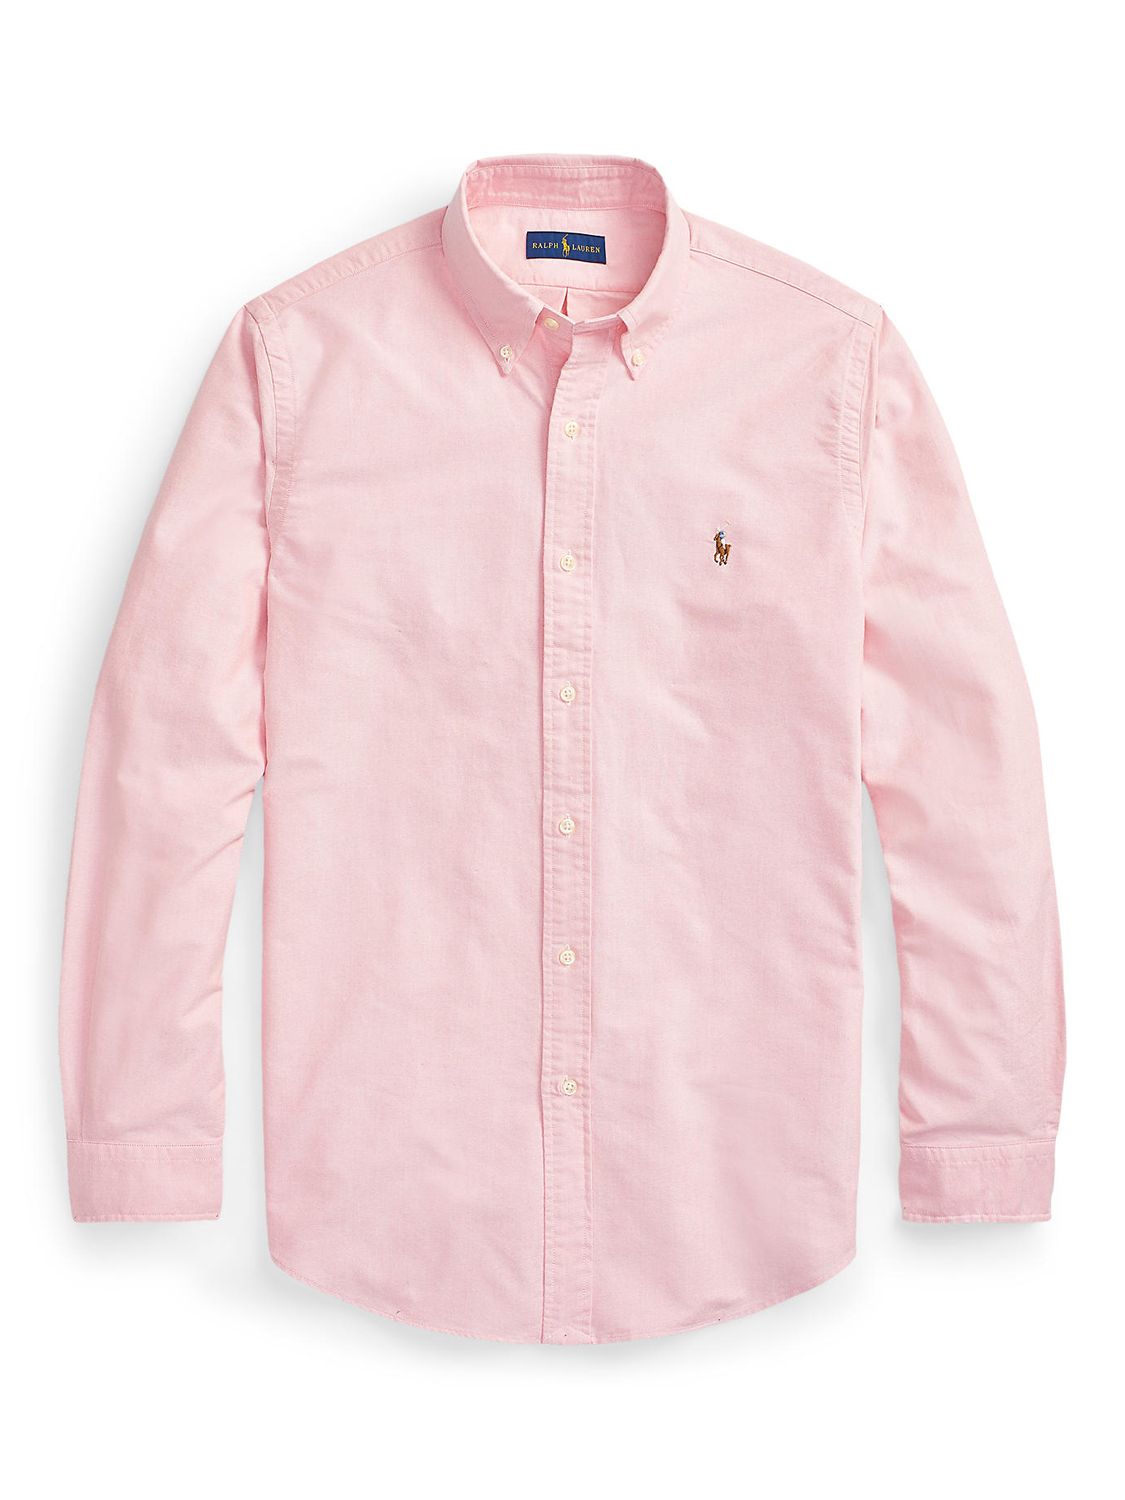 Polo Ralph Lauren Custom Fit Oxford Shirt,Pink, XS